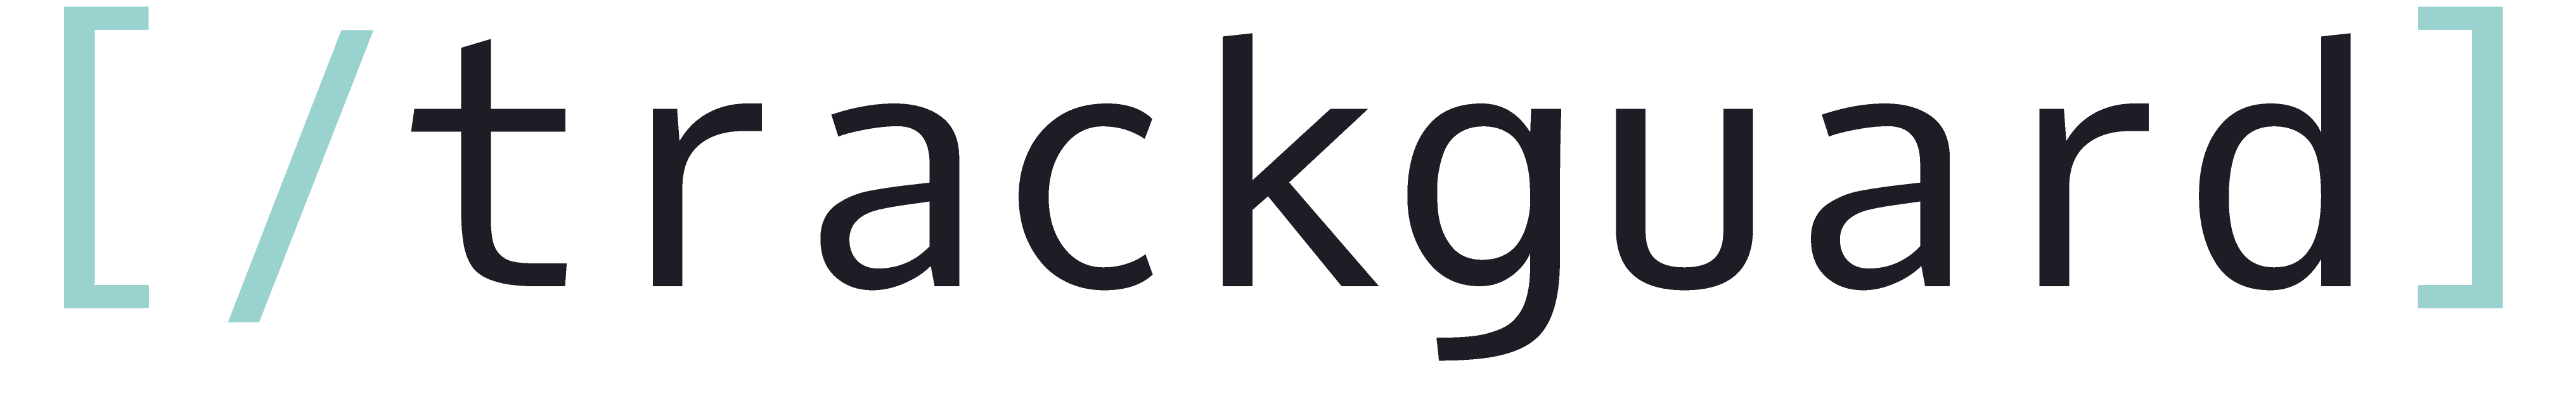 Trackguard logotipas